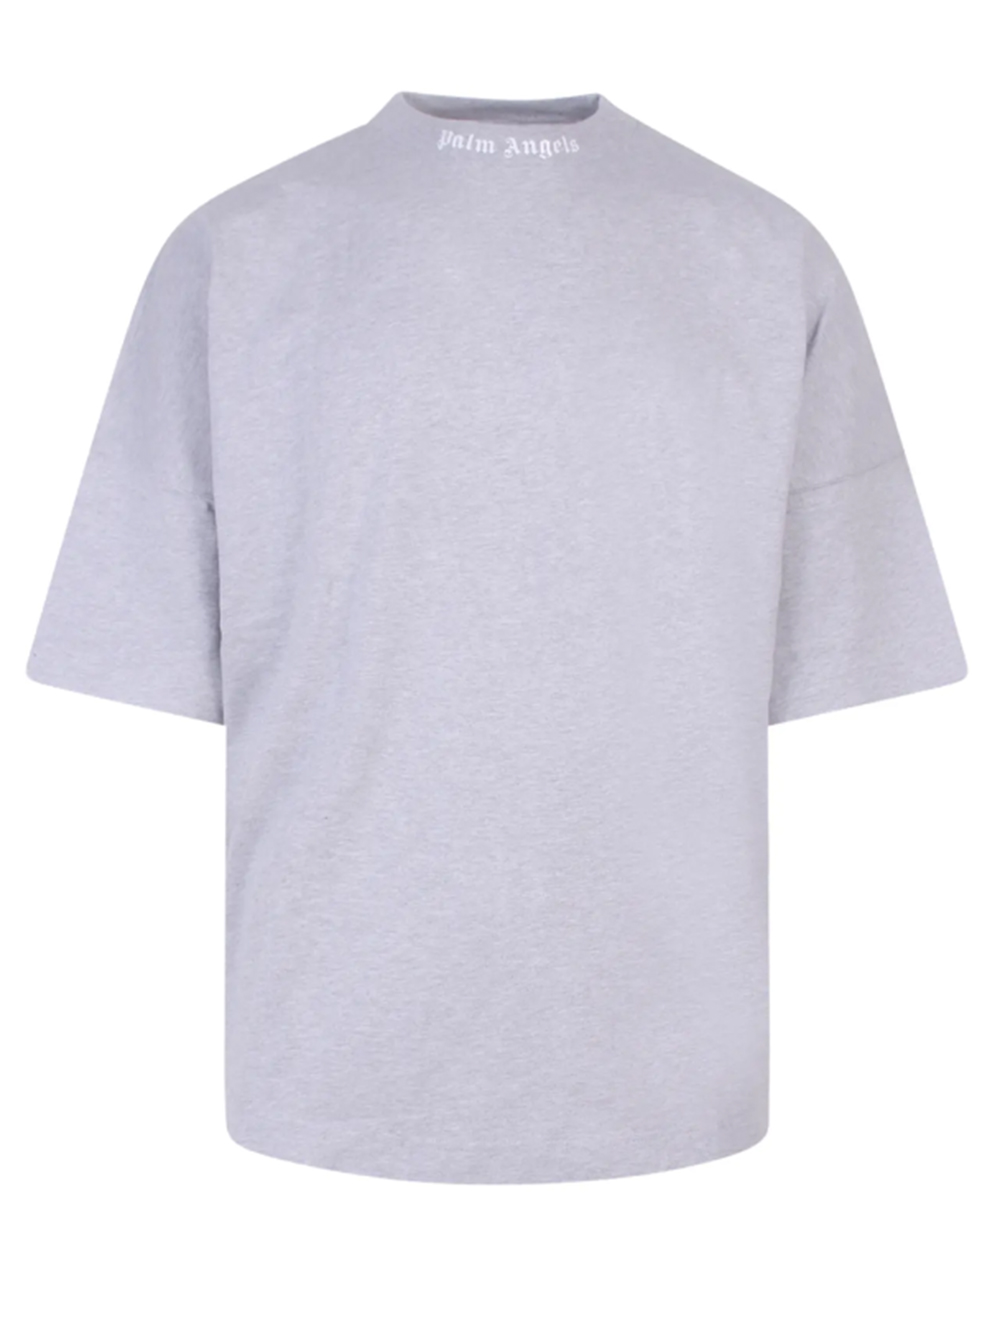 Palm Angels Gothic Logo Longsleeve T-Shirt Melange Grey